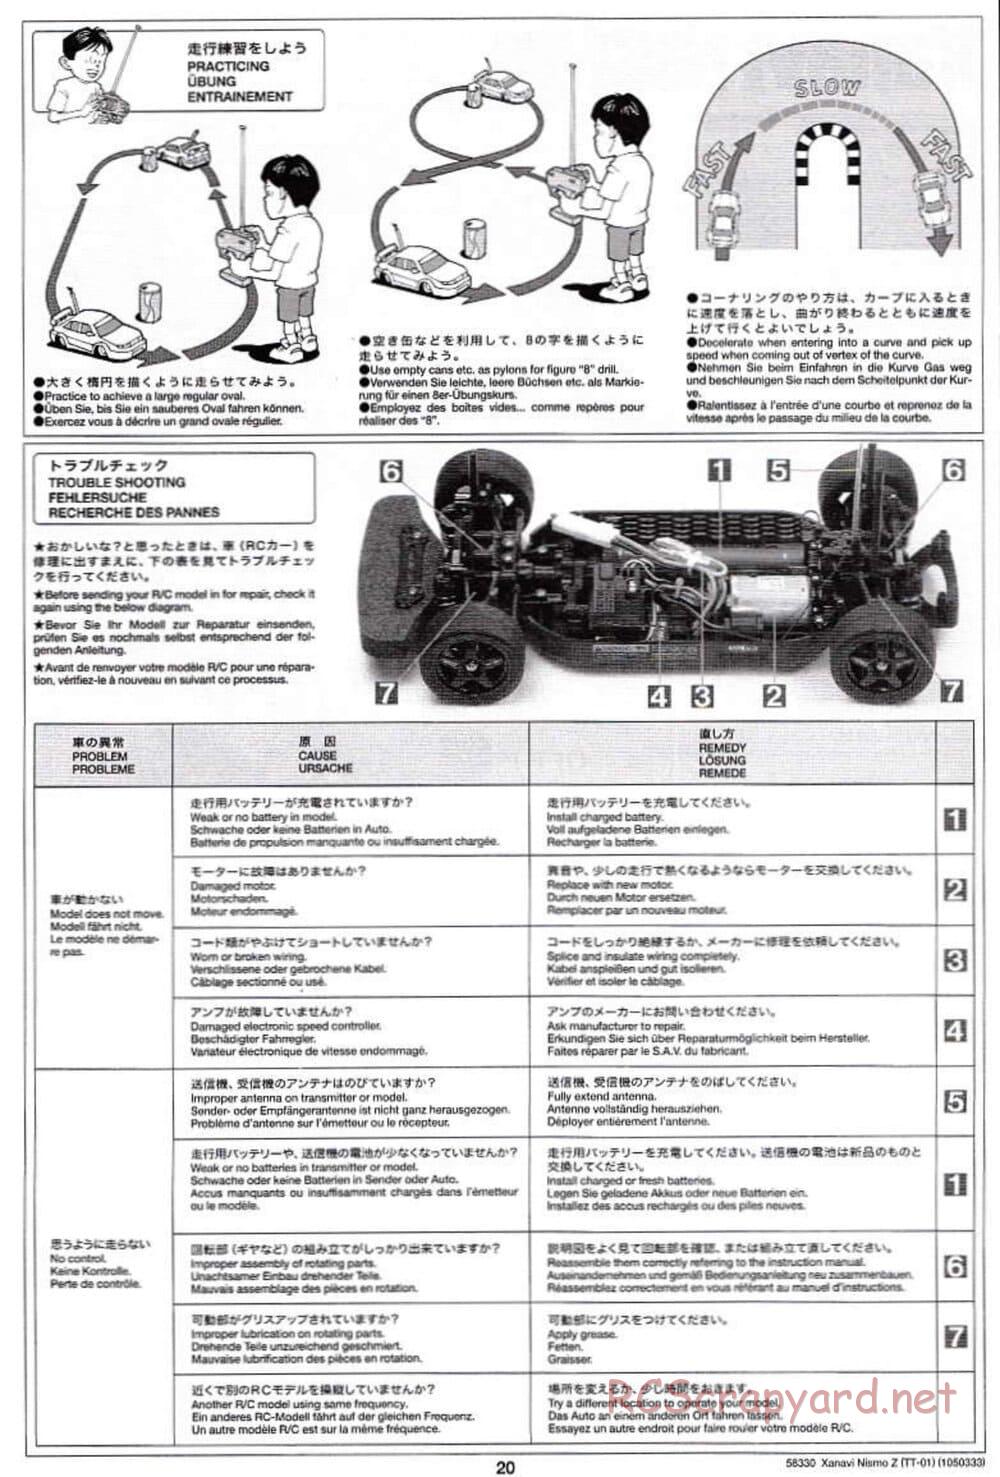 Tamiya - Xanavi Nismo Z - TT-01 Chassis - Manual - Page 20